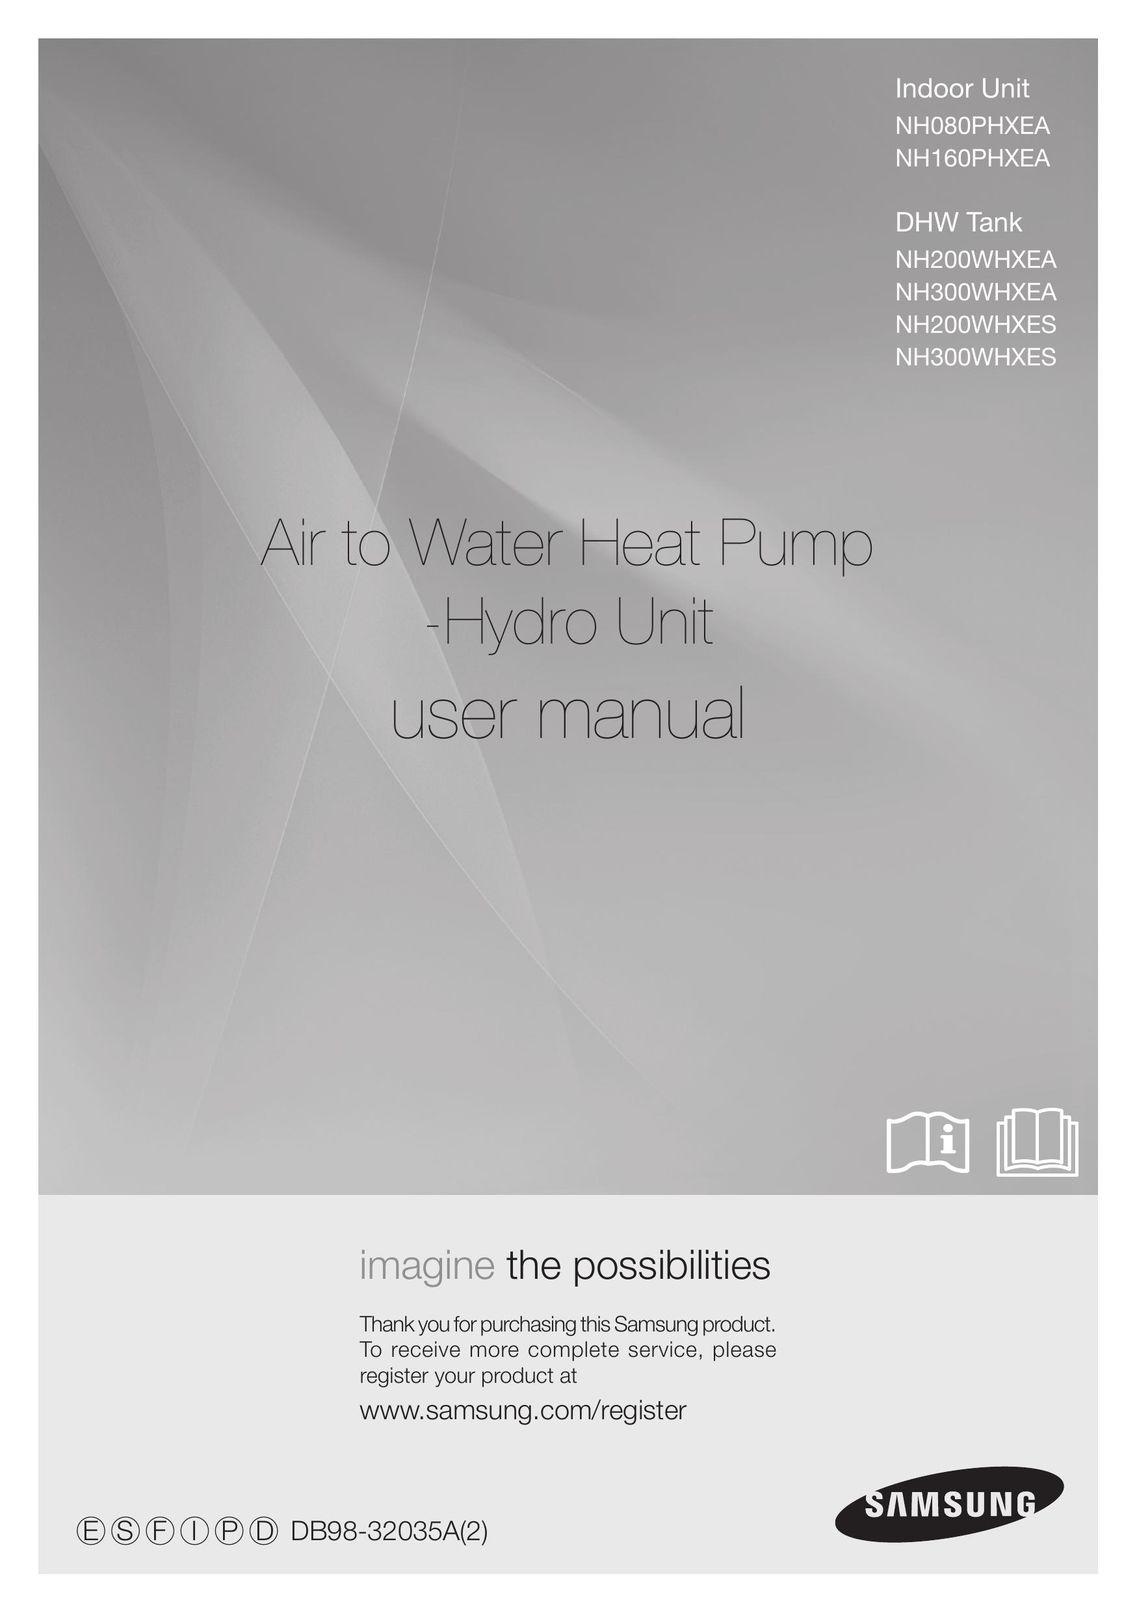 Samsung NH300WHXEA Heat Pump User Manual